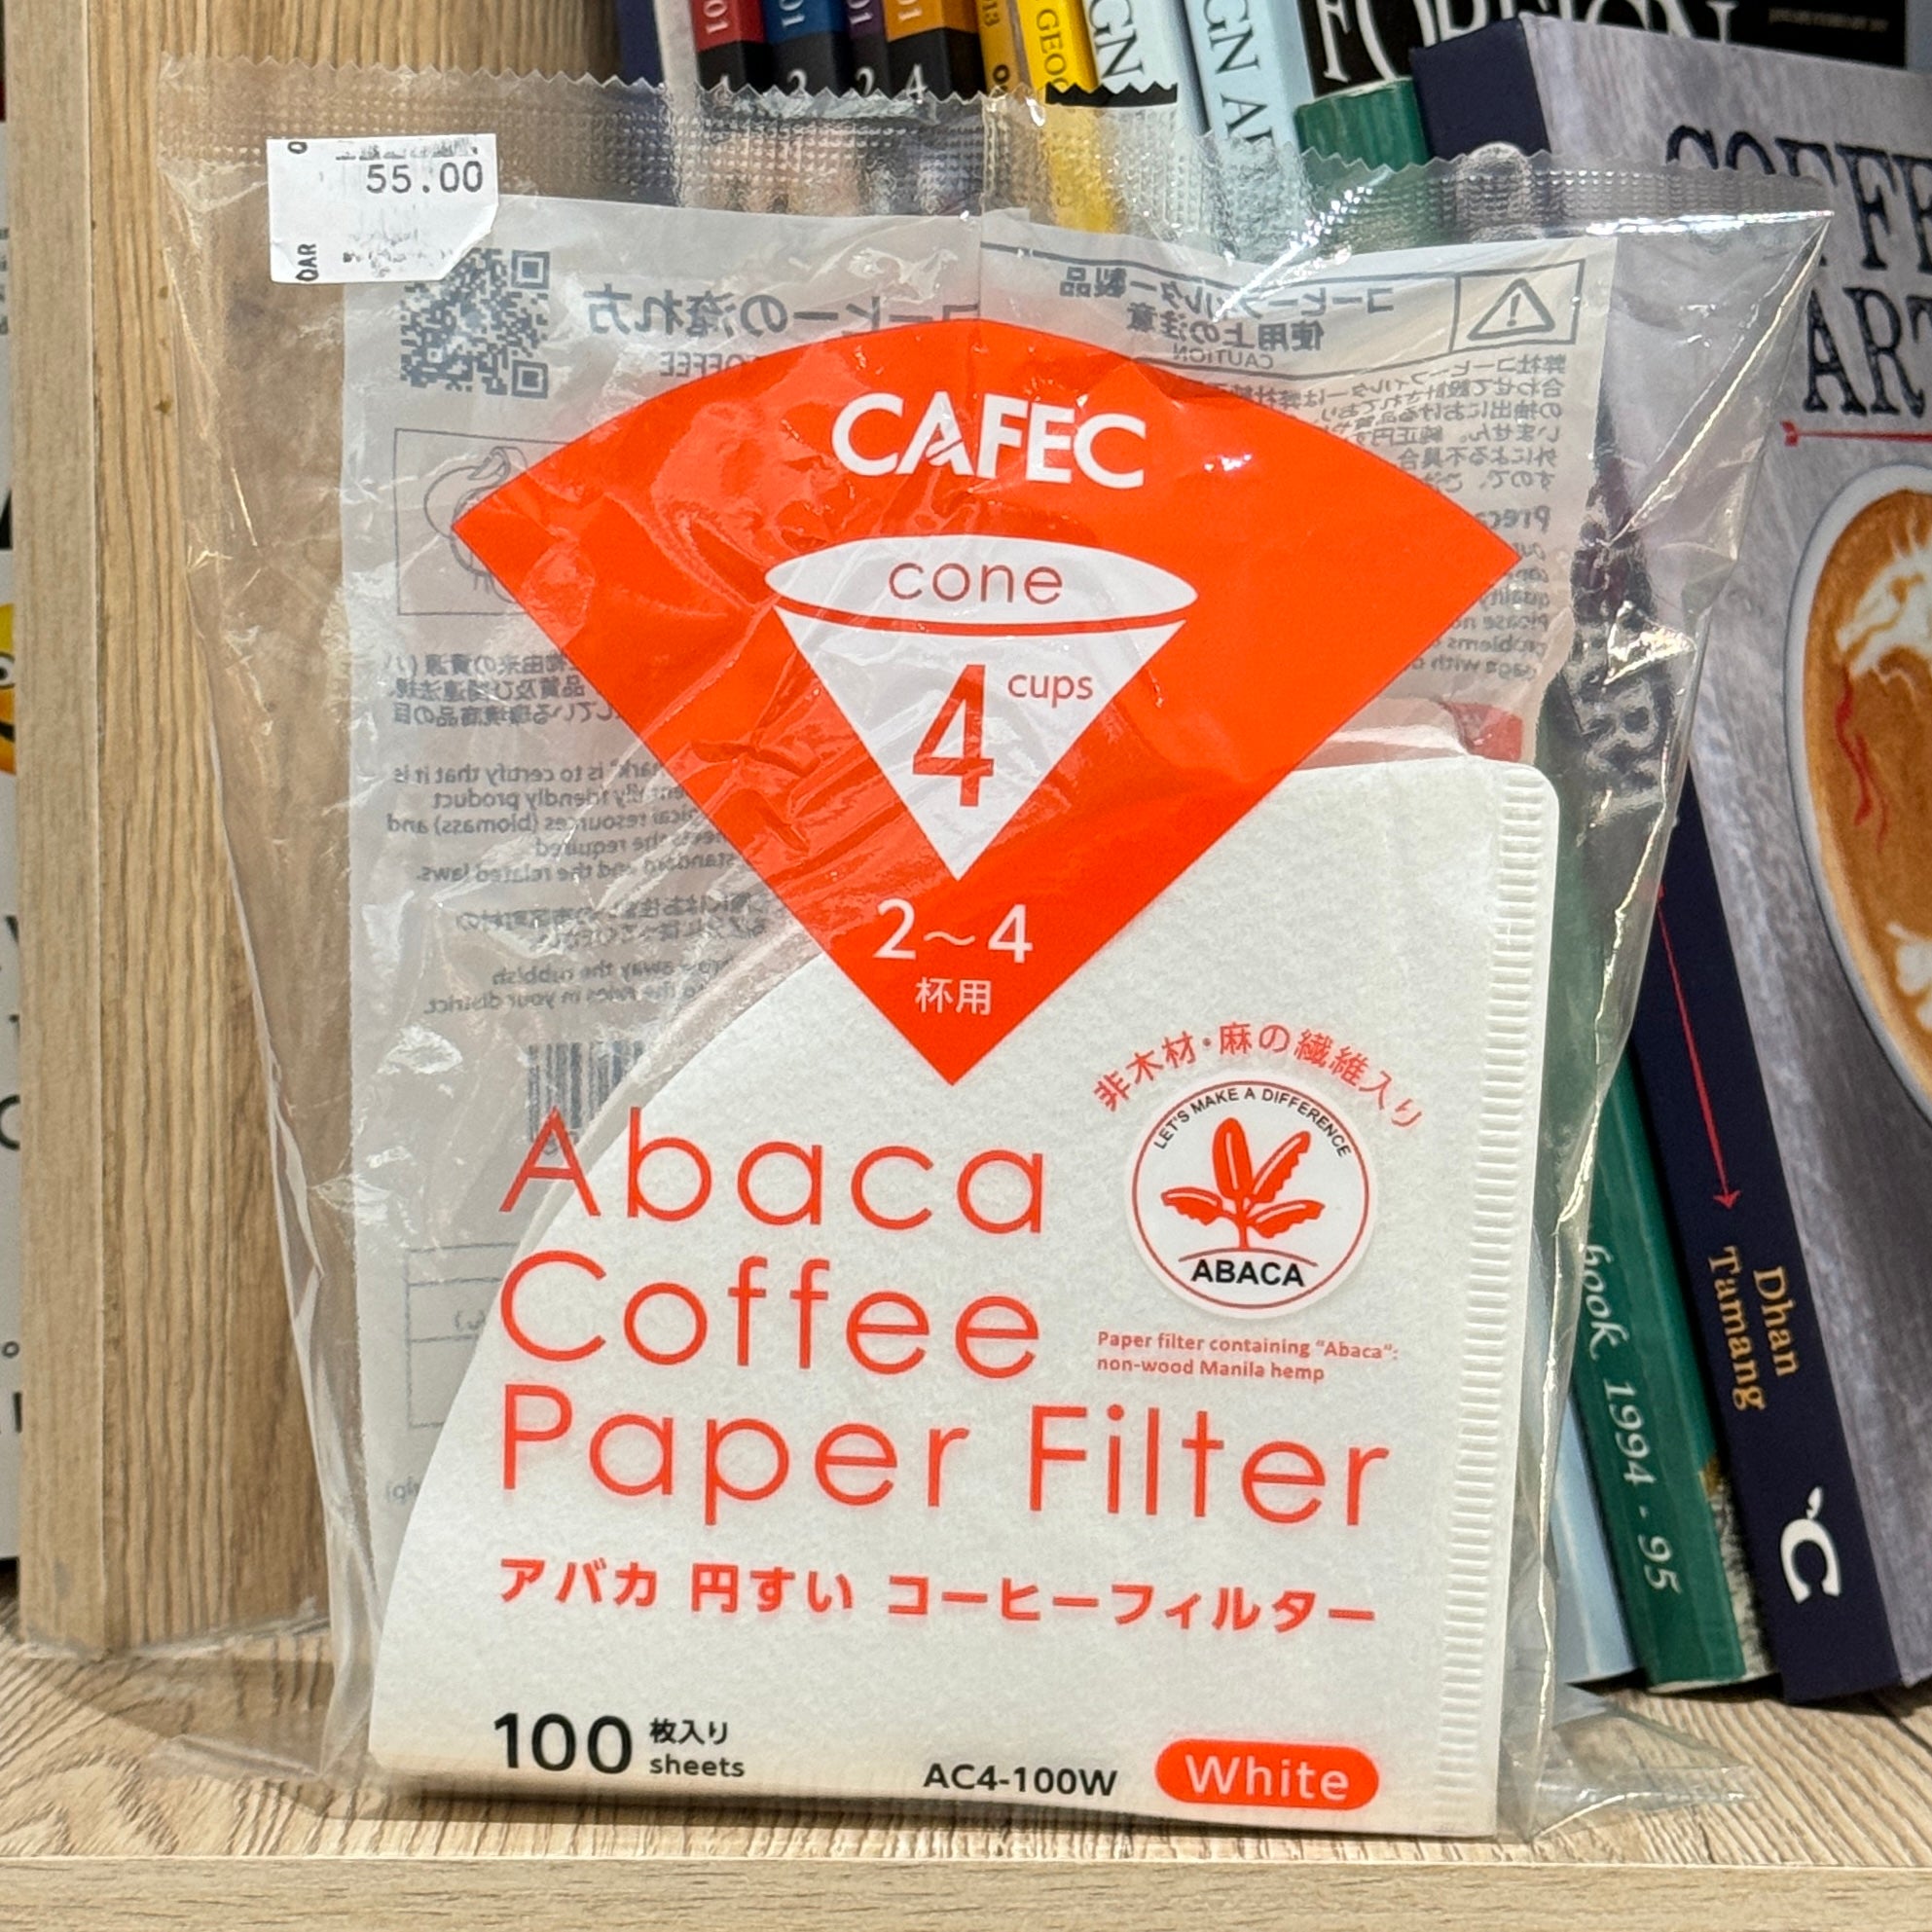 Abaca paper filter 100pc - فلاتر ورقية 100 قطعة